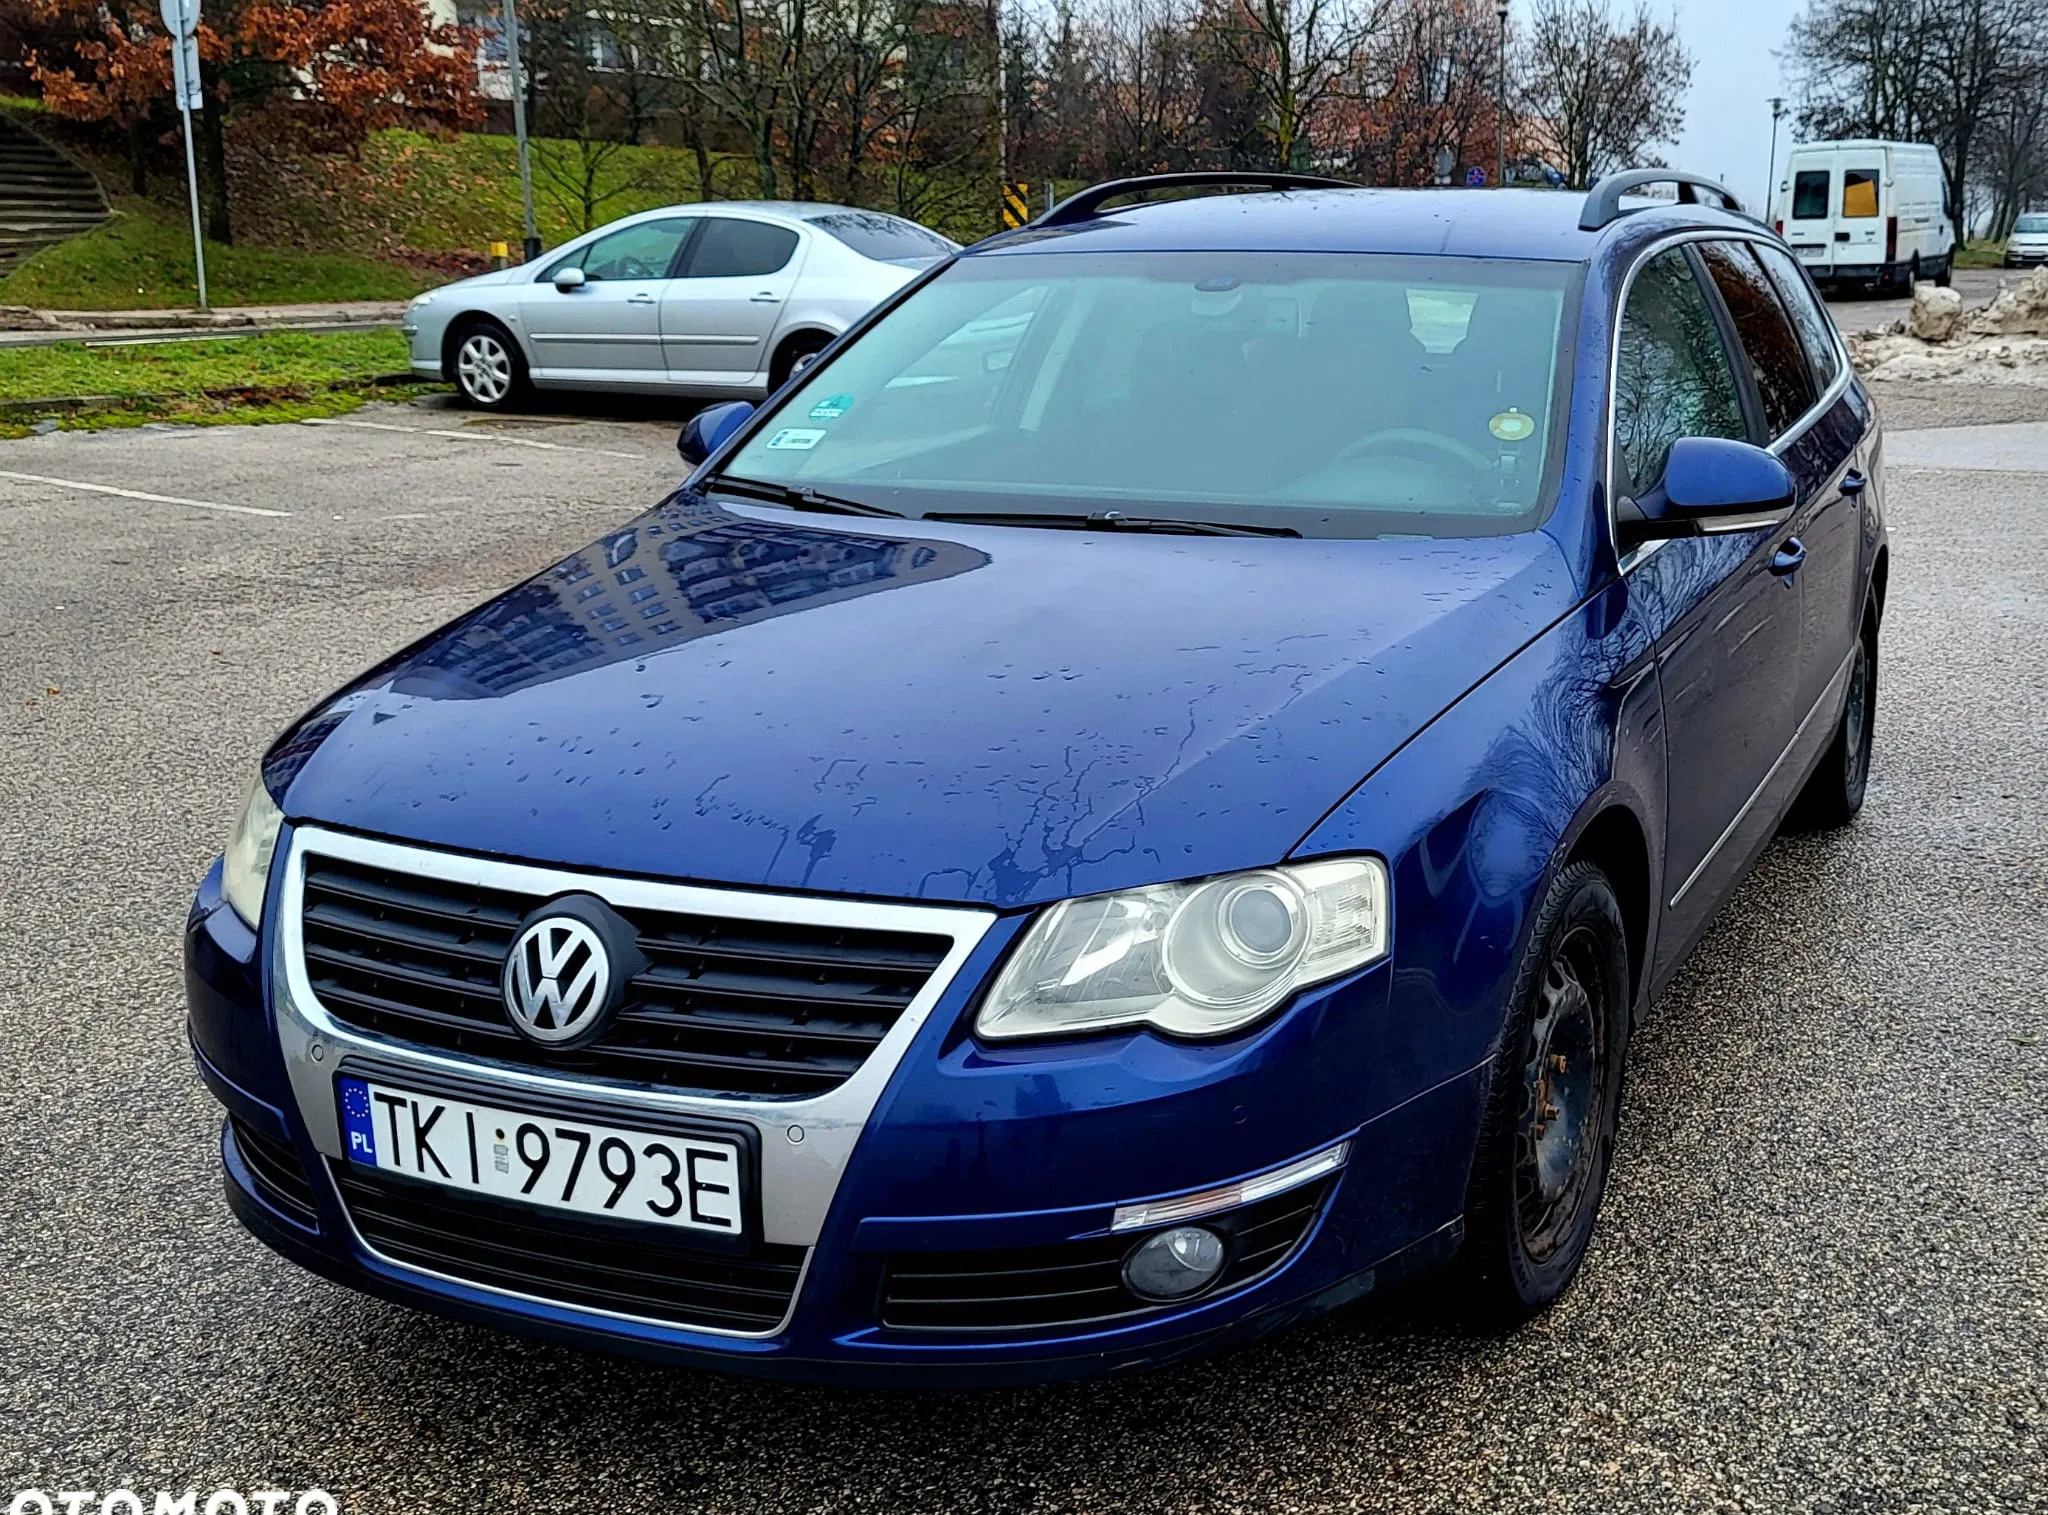 volkswagen Volkswagen Passat cena 9900 przebieg: 377000, rok produkcji 2007 z Kielce